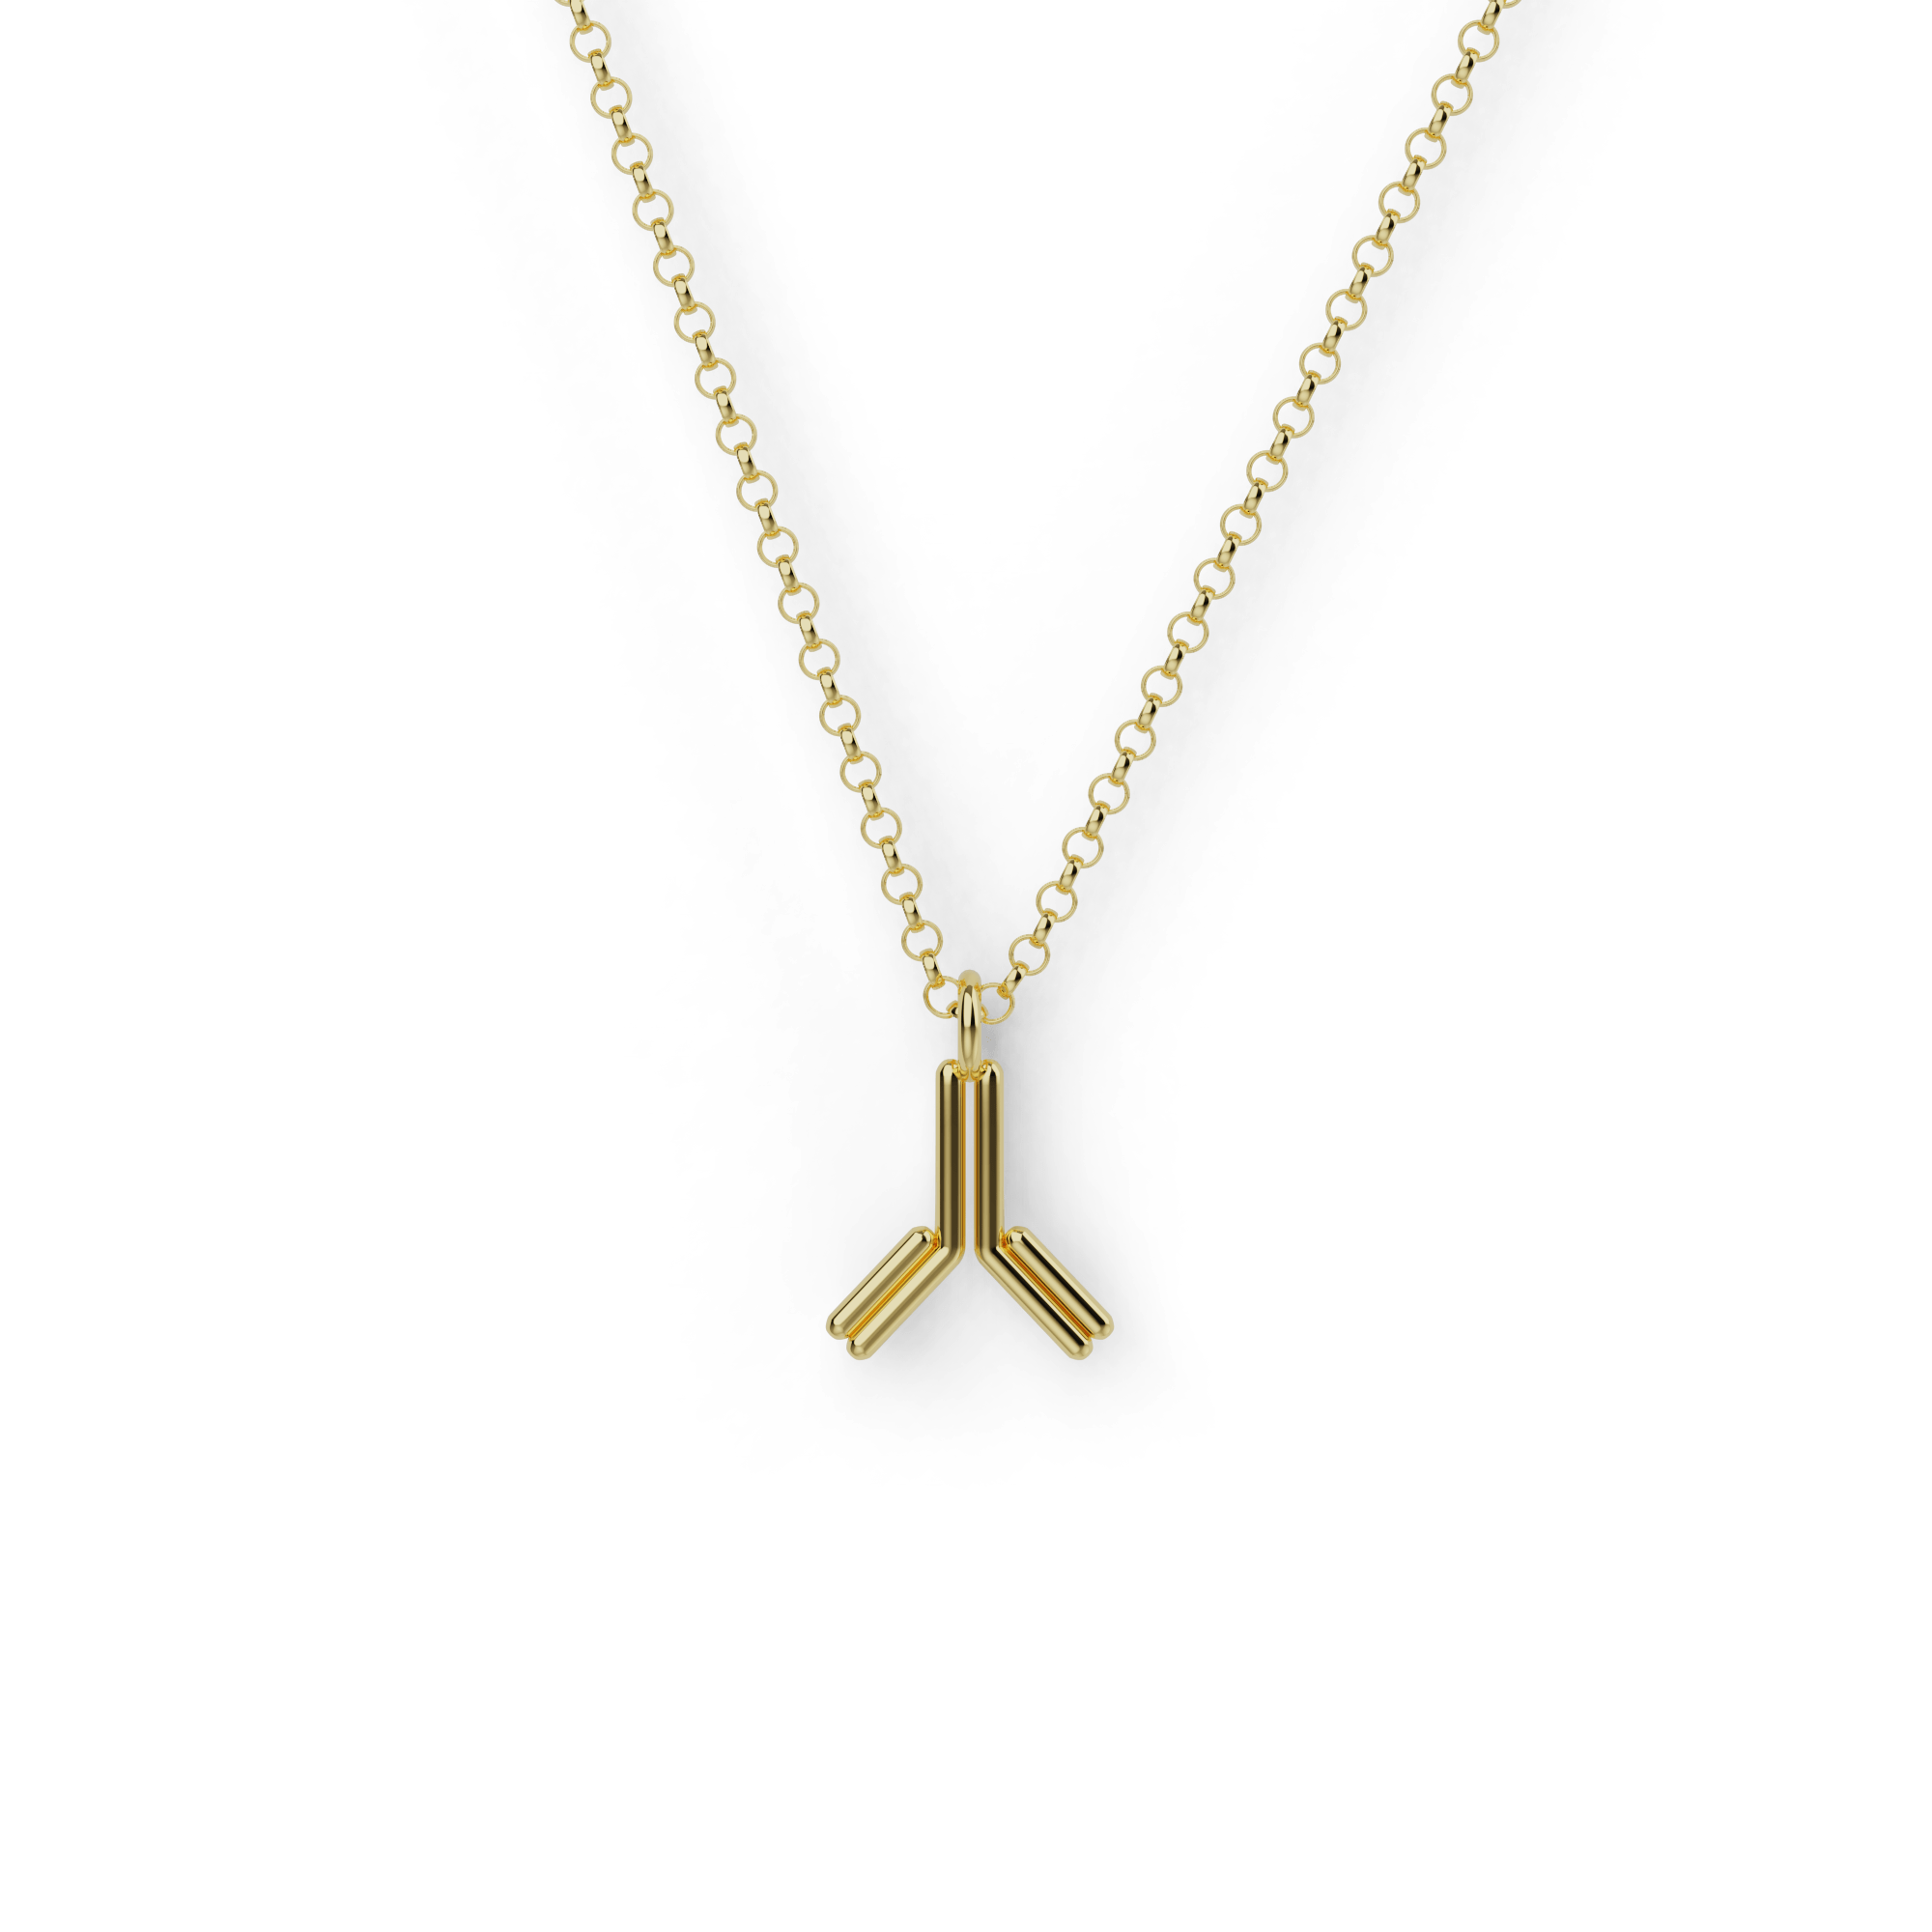 antibody necklace | gold vermeil